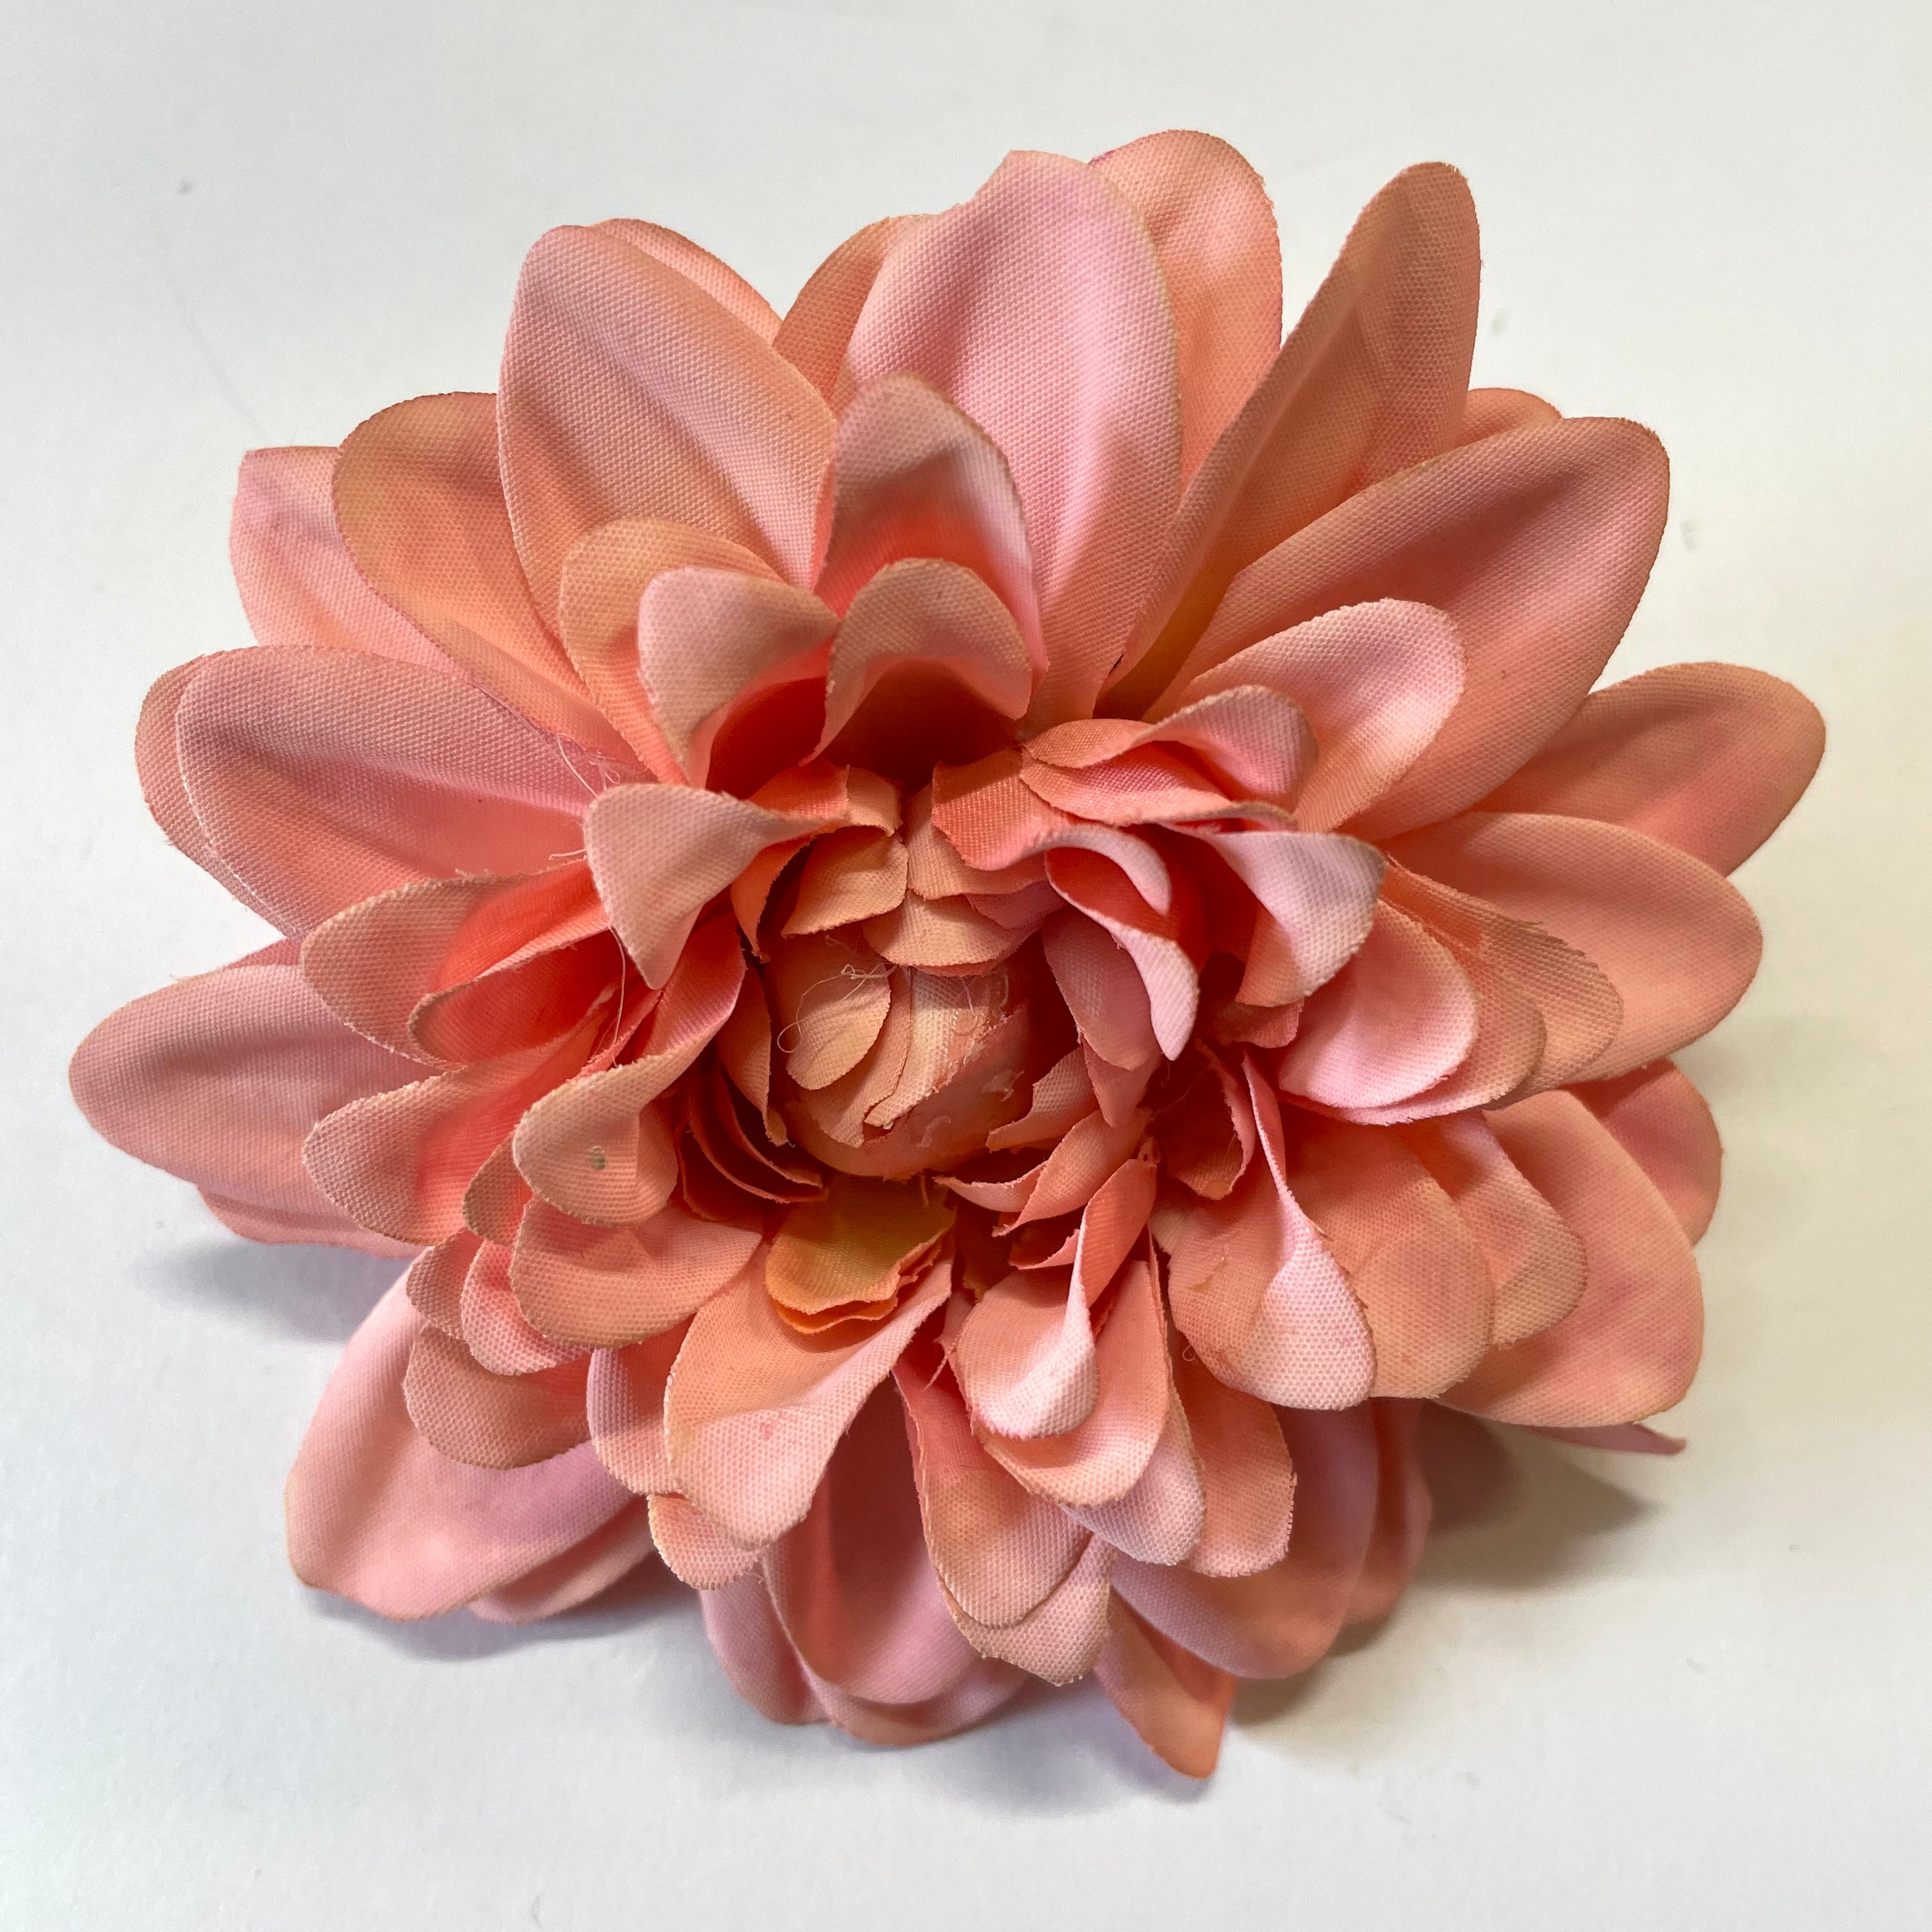 Artificial Silk Flower Heads - Dusty Pink Chrysanthemum Style 26 - 1pc